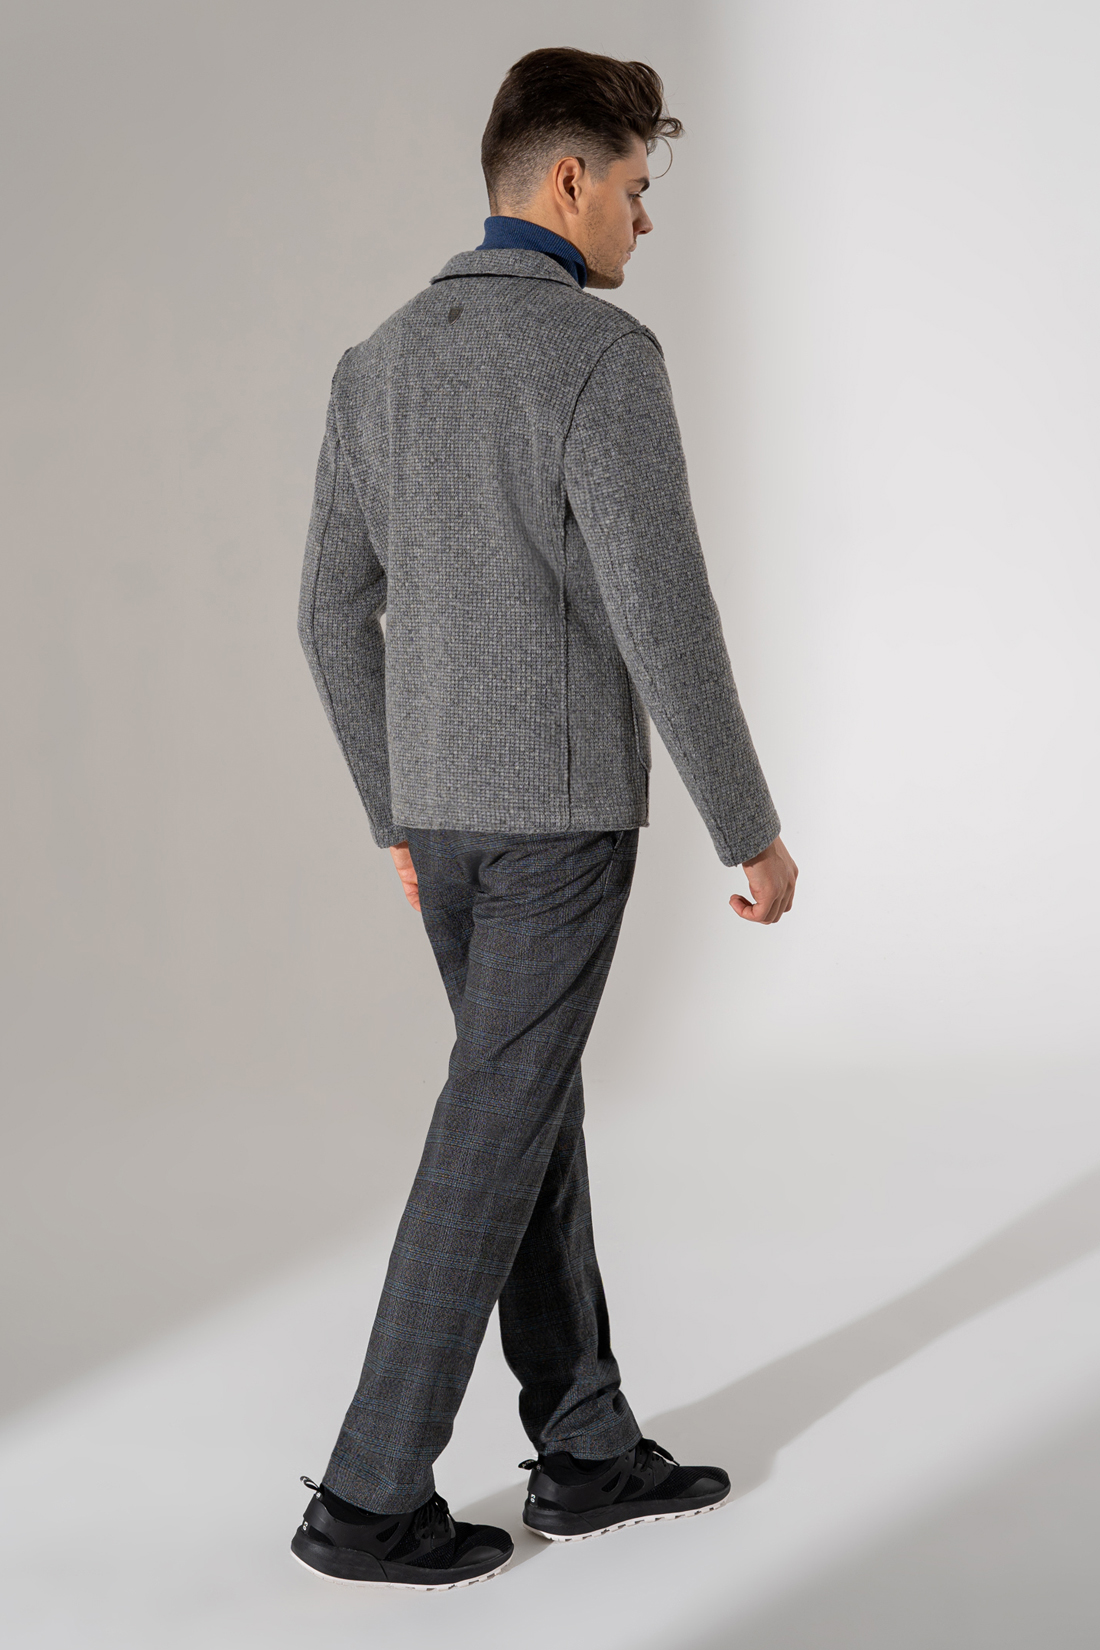 Серый пиджак с шерстью (арт. baon B629503), размер S, цвет deep grey melange#серый Серый пиджак с шерстью (арт. baon B629503) - фото 2